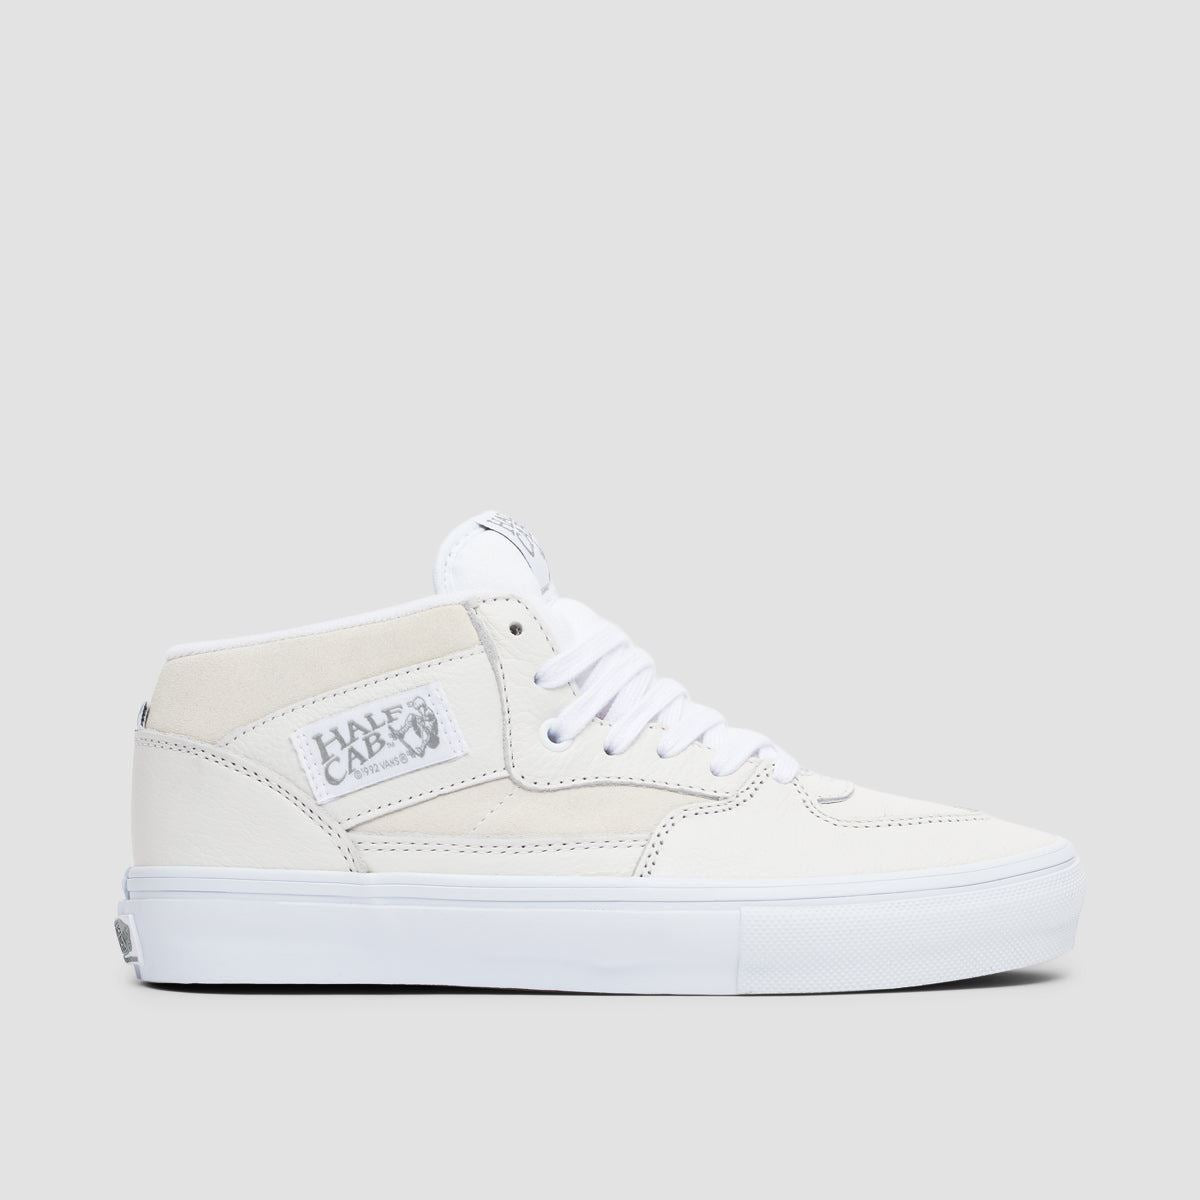 Vans Skate Half Cab Mid Top Shoes - Daz White/White